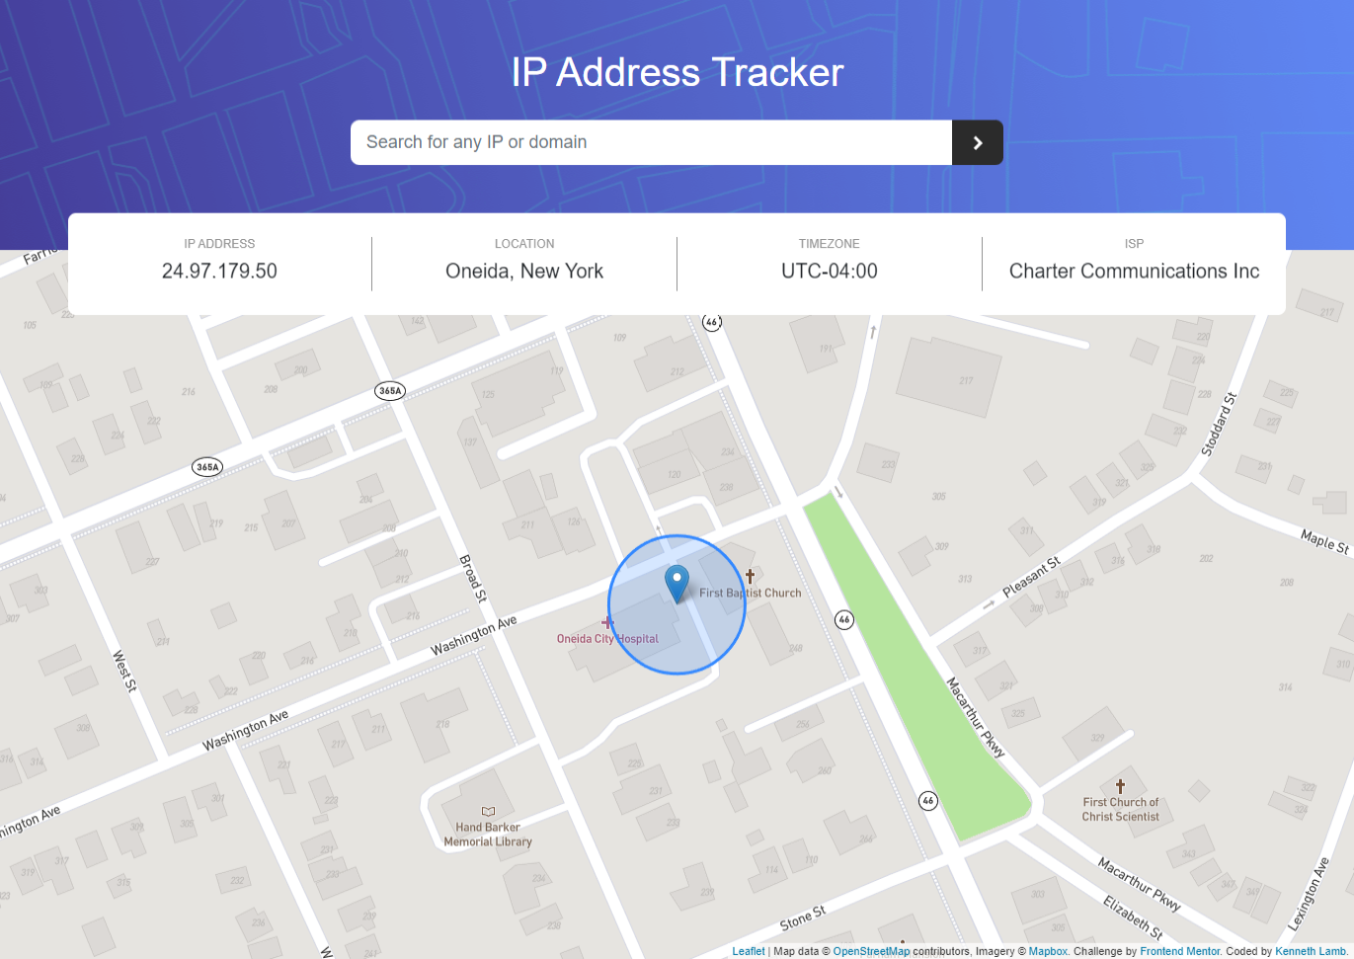 IP Tracker